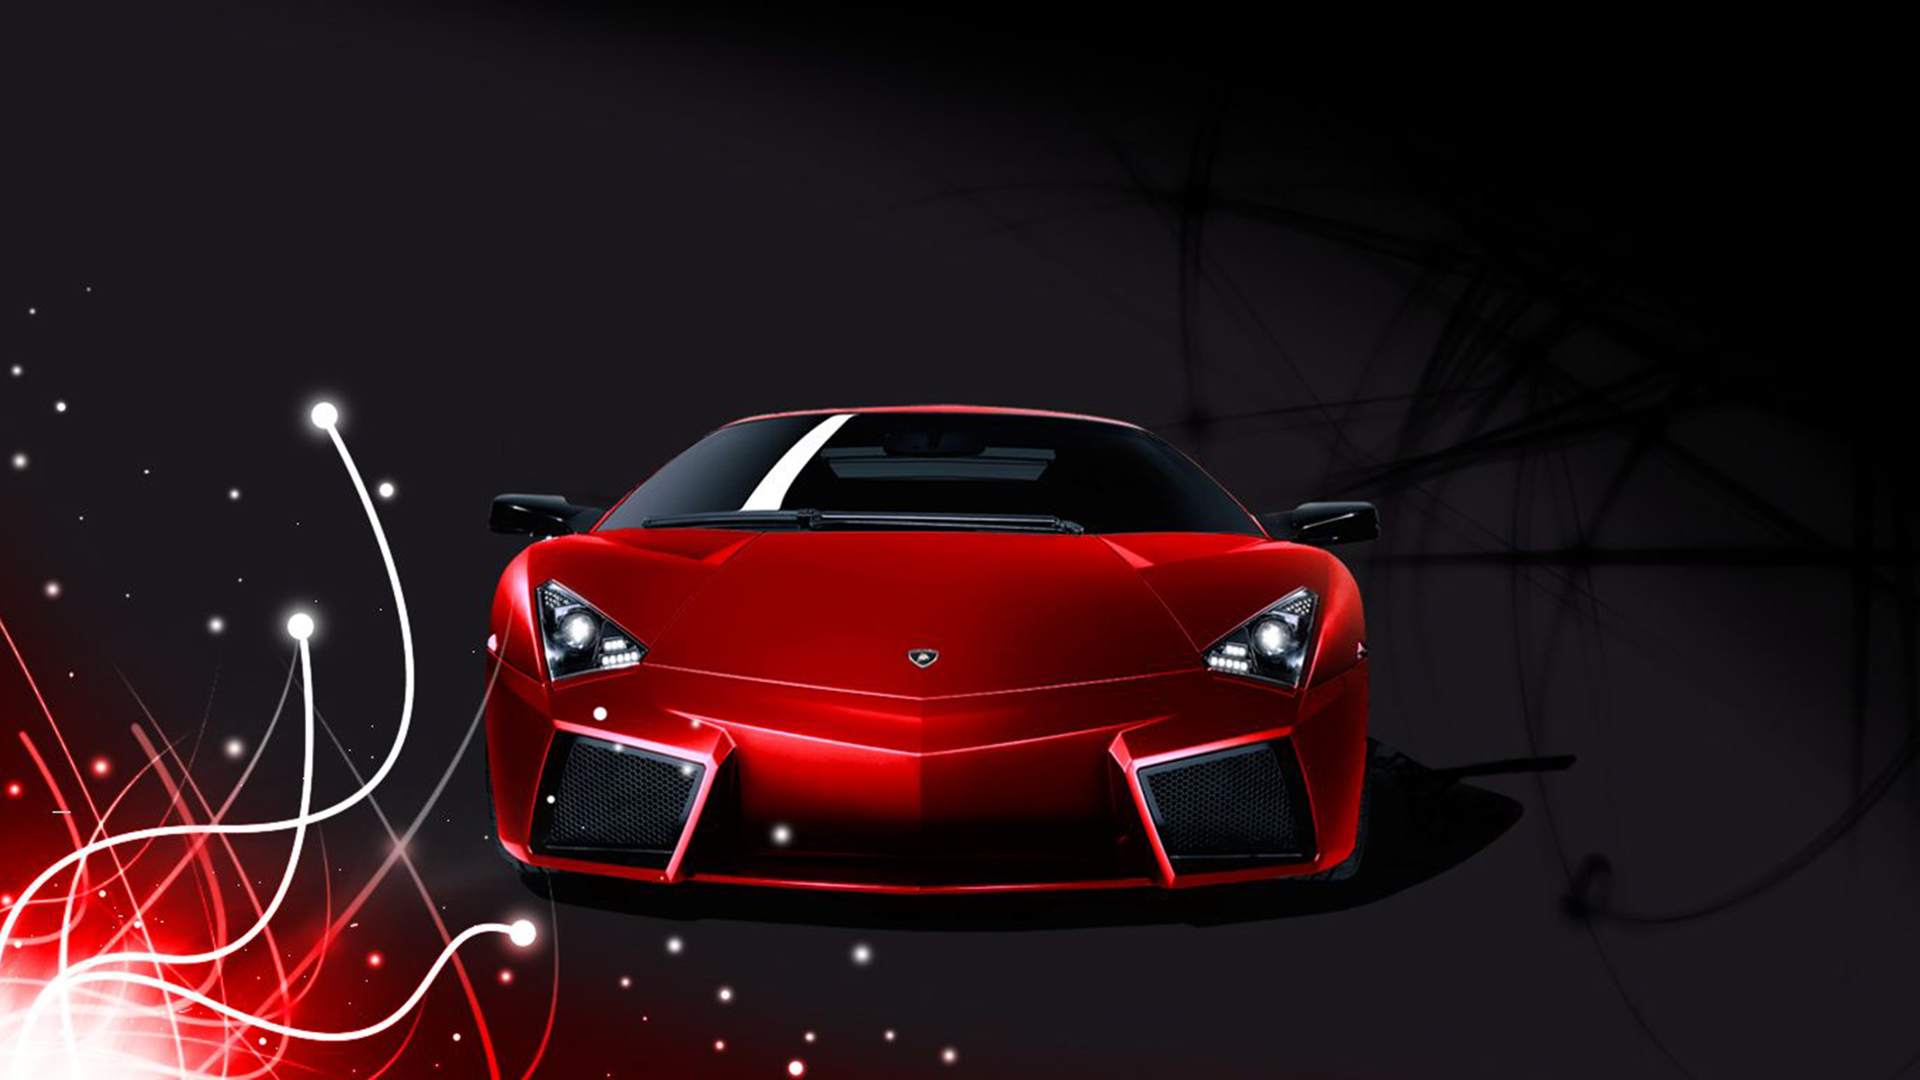 Cool Lamborghini Wallpapers for PC Free